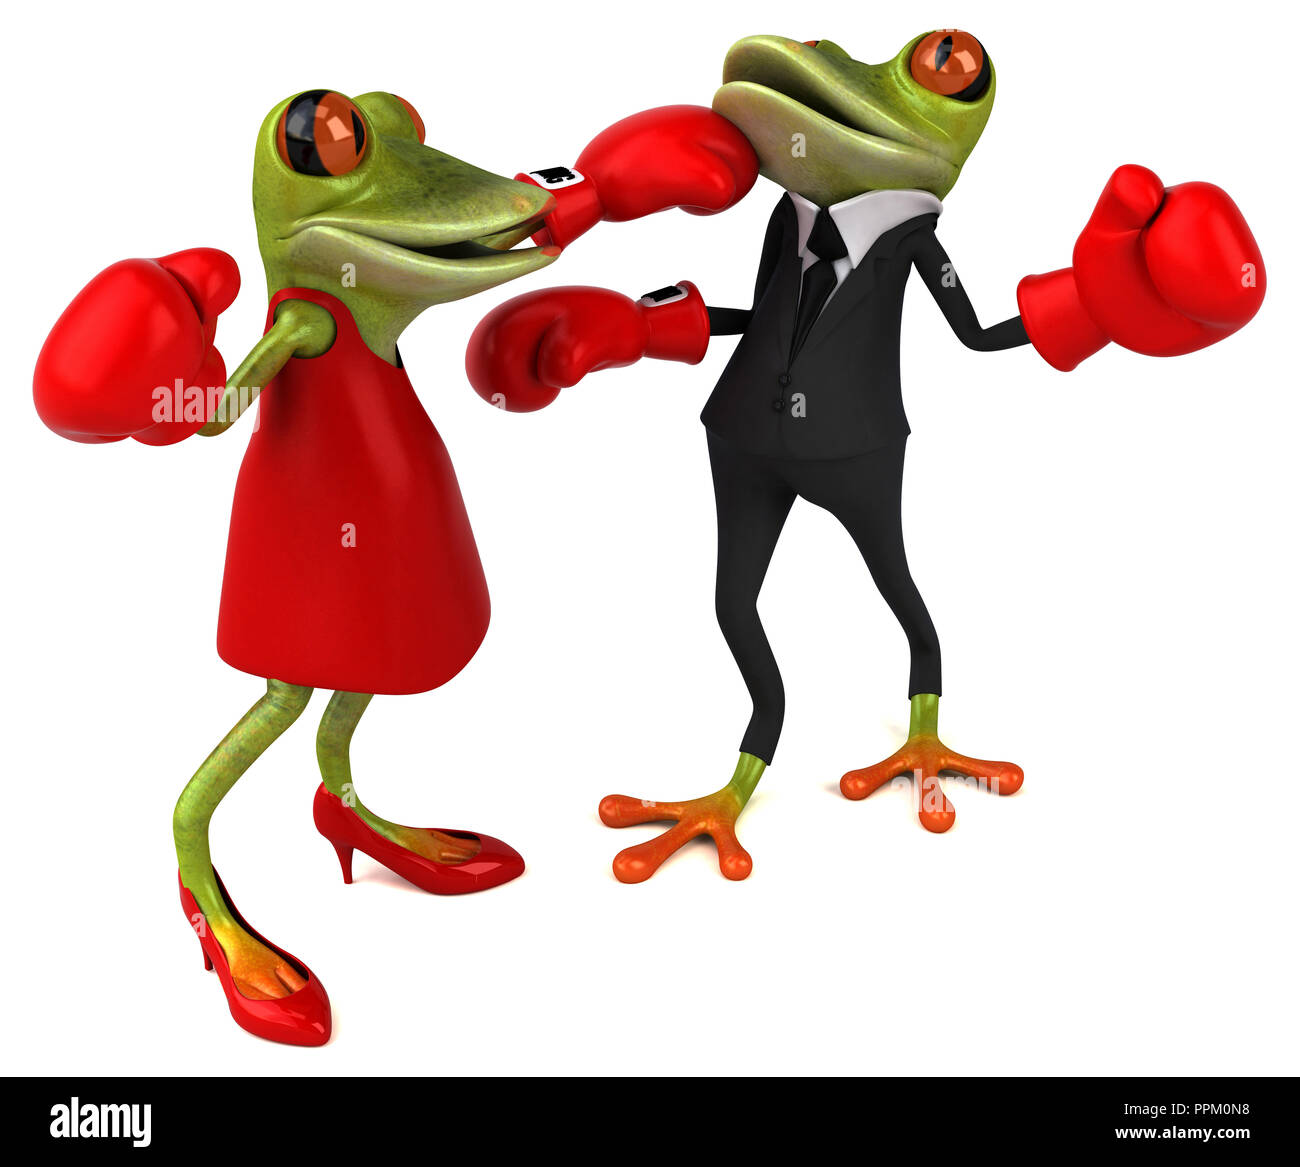 Fun frogs fighting - 3D Illustration Stock Photo - Alamy